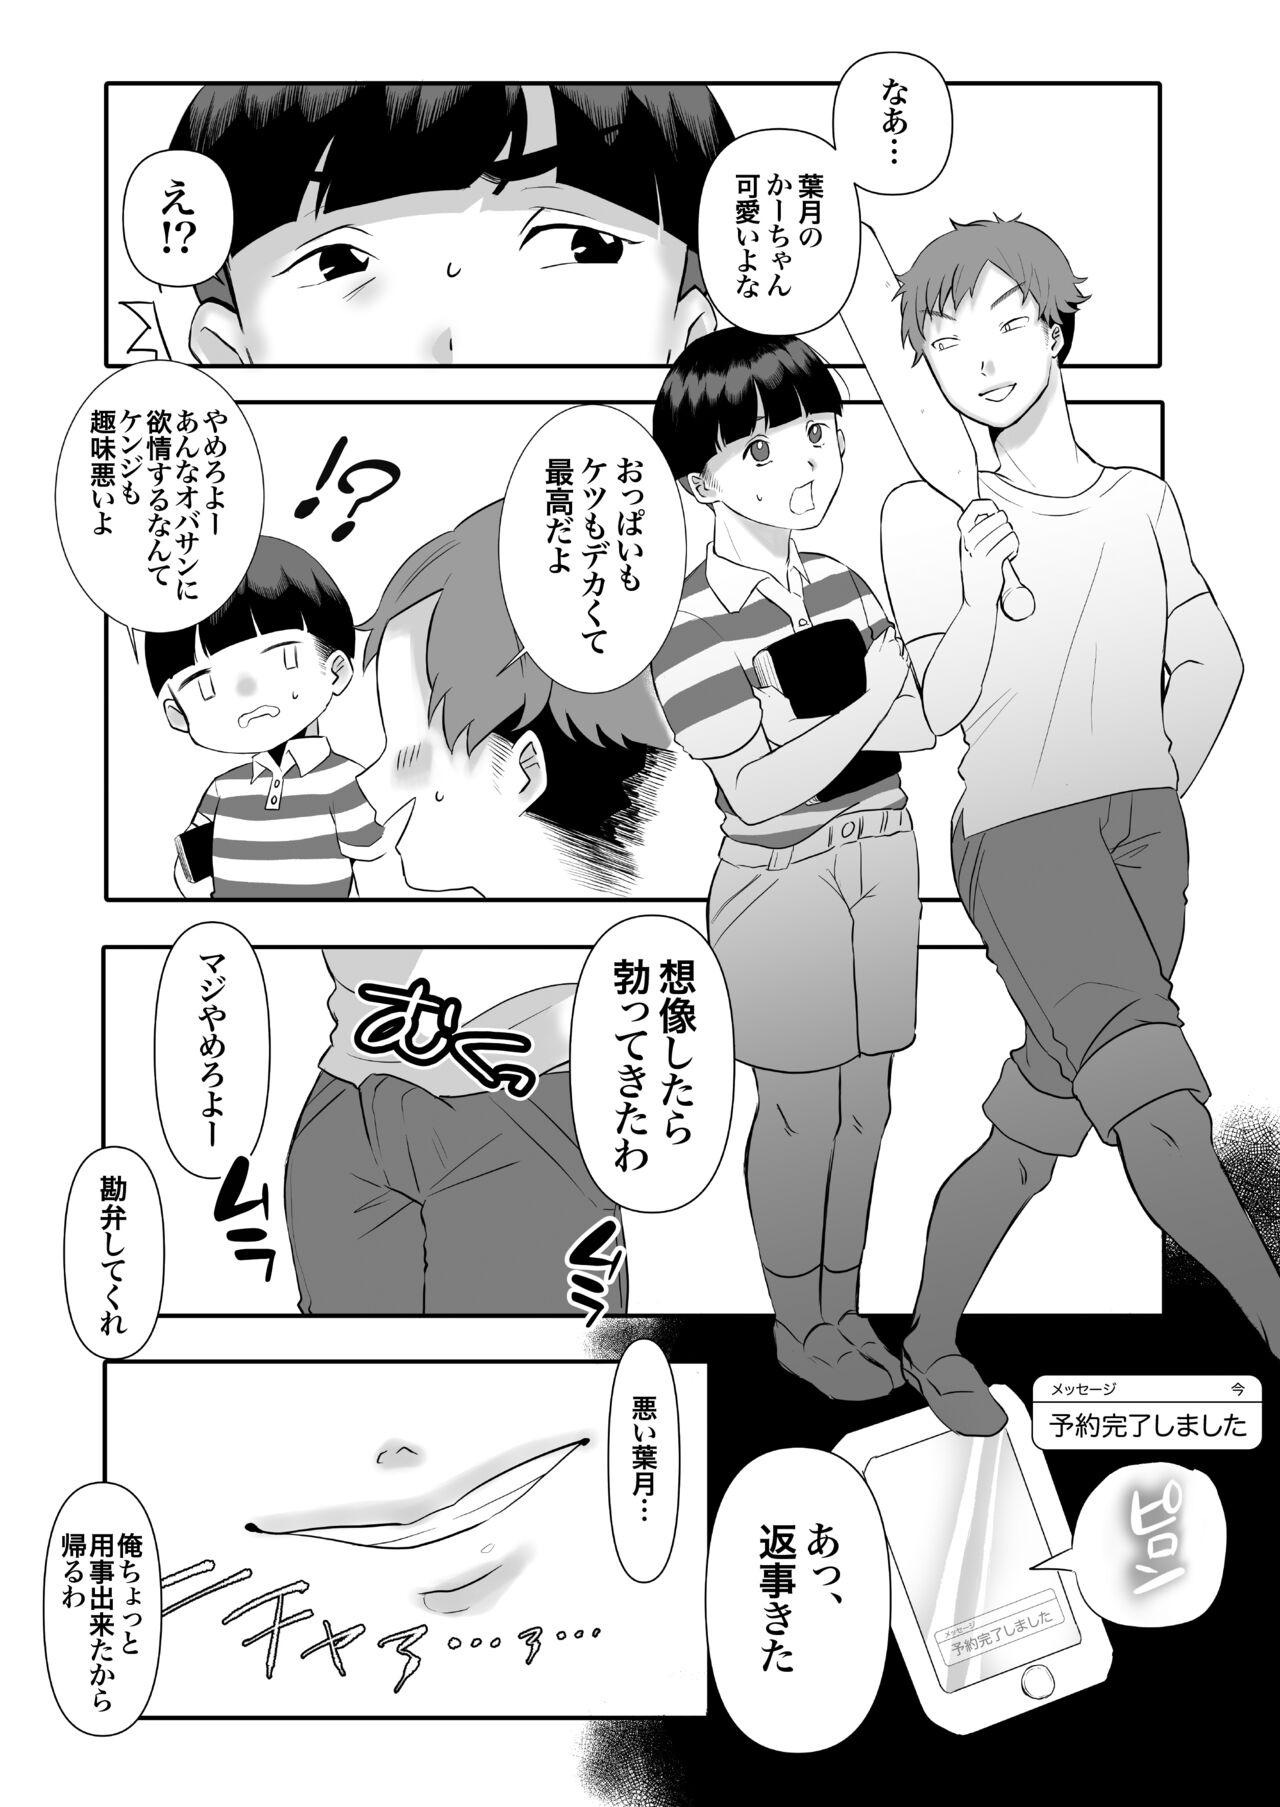 Paja DeliHeal Yondara Tomodachi no Kaa-chan ga Kita. - Original Boobs - Page 7